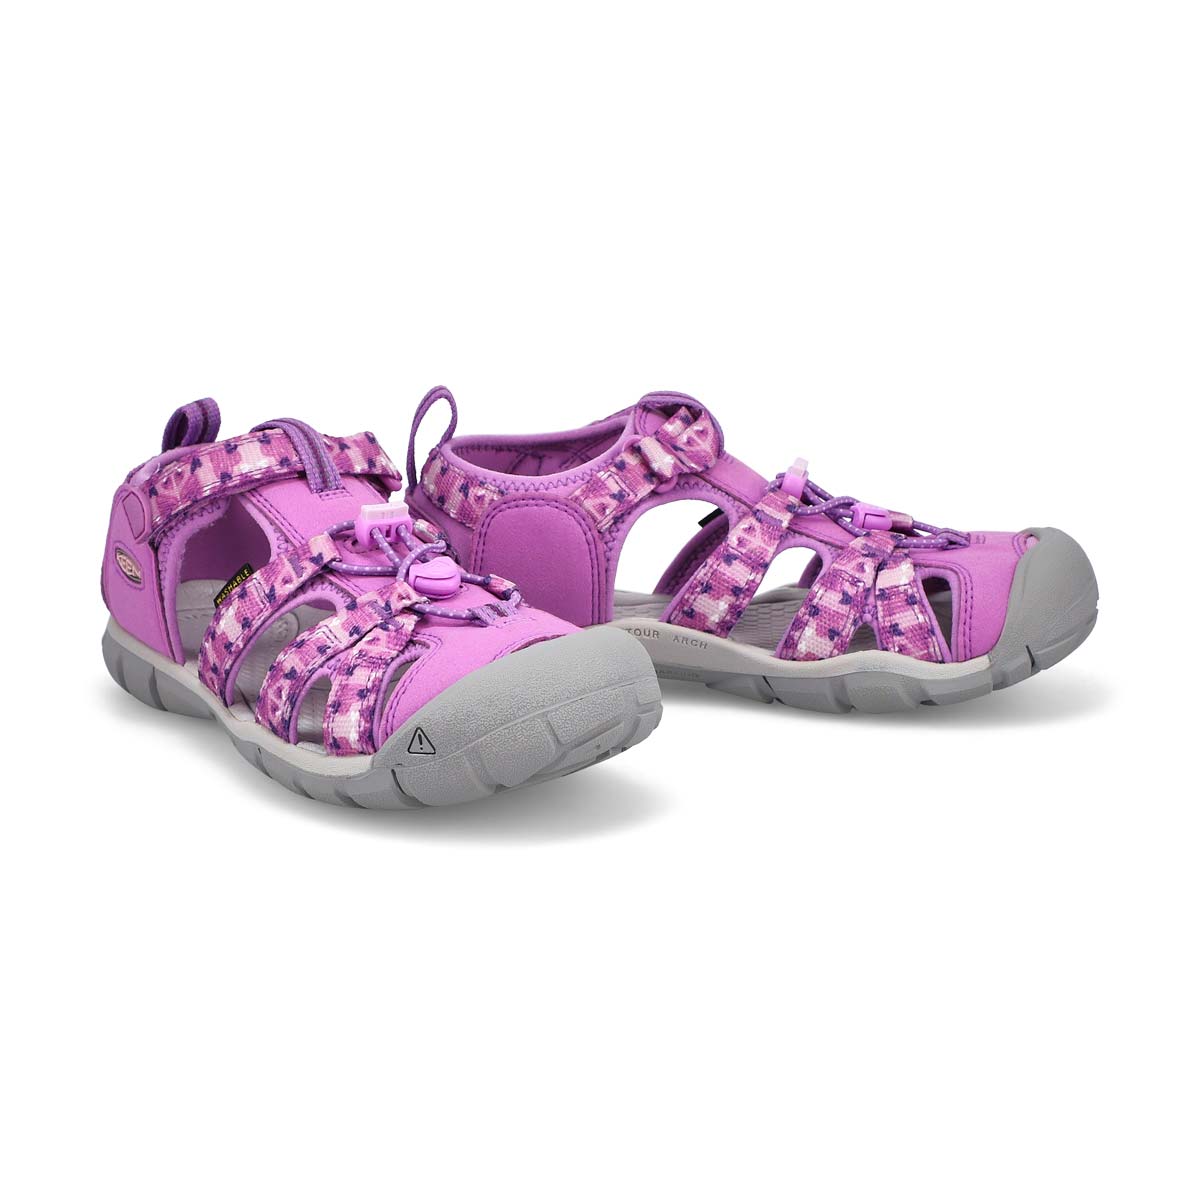 Sandale sport SeacampIICNX violet/lavande filles